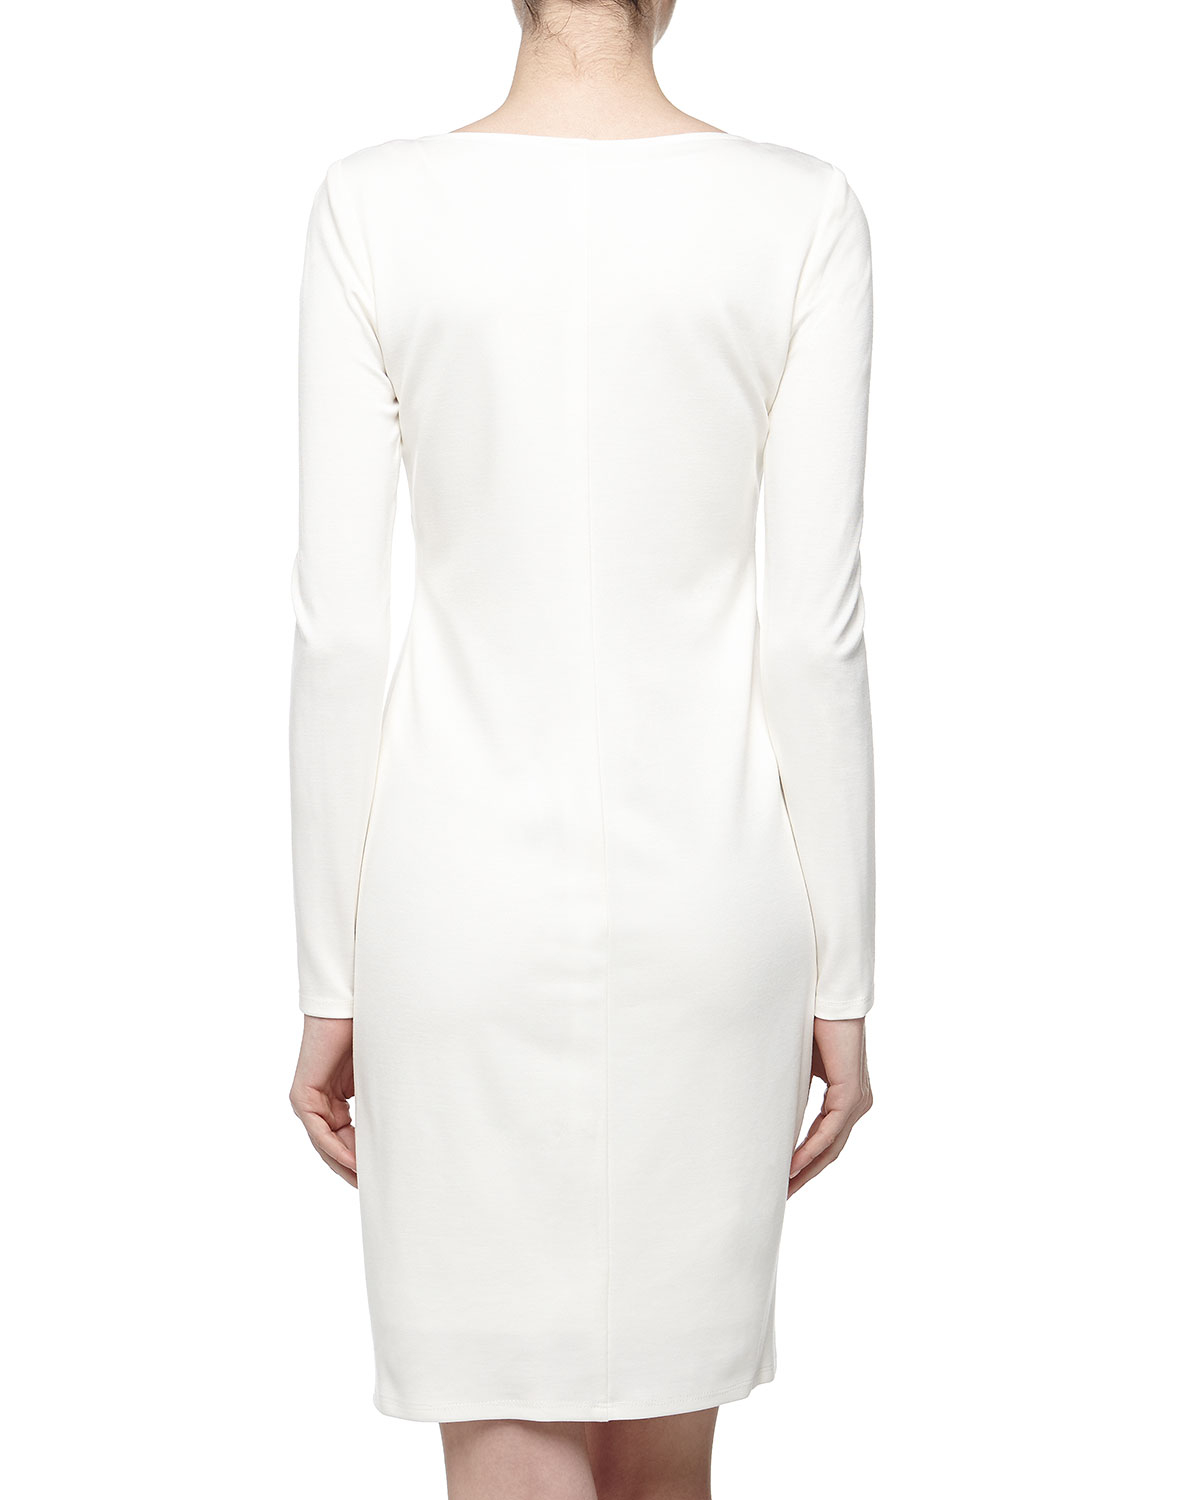 White sheath dress long sleeve tops